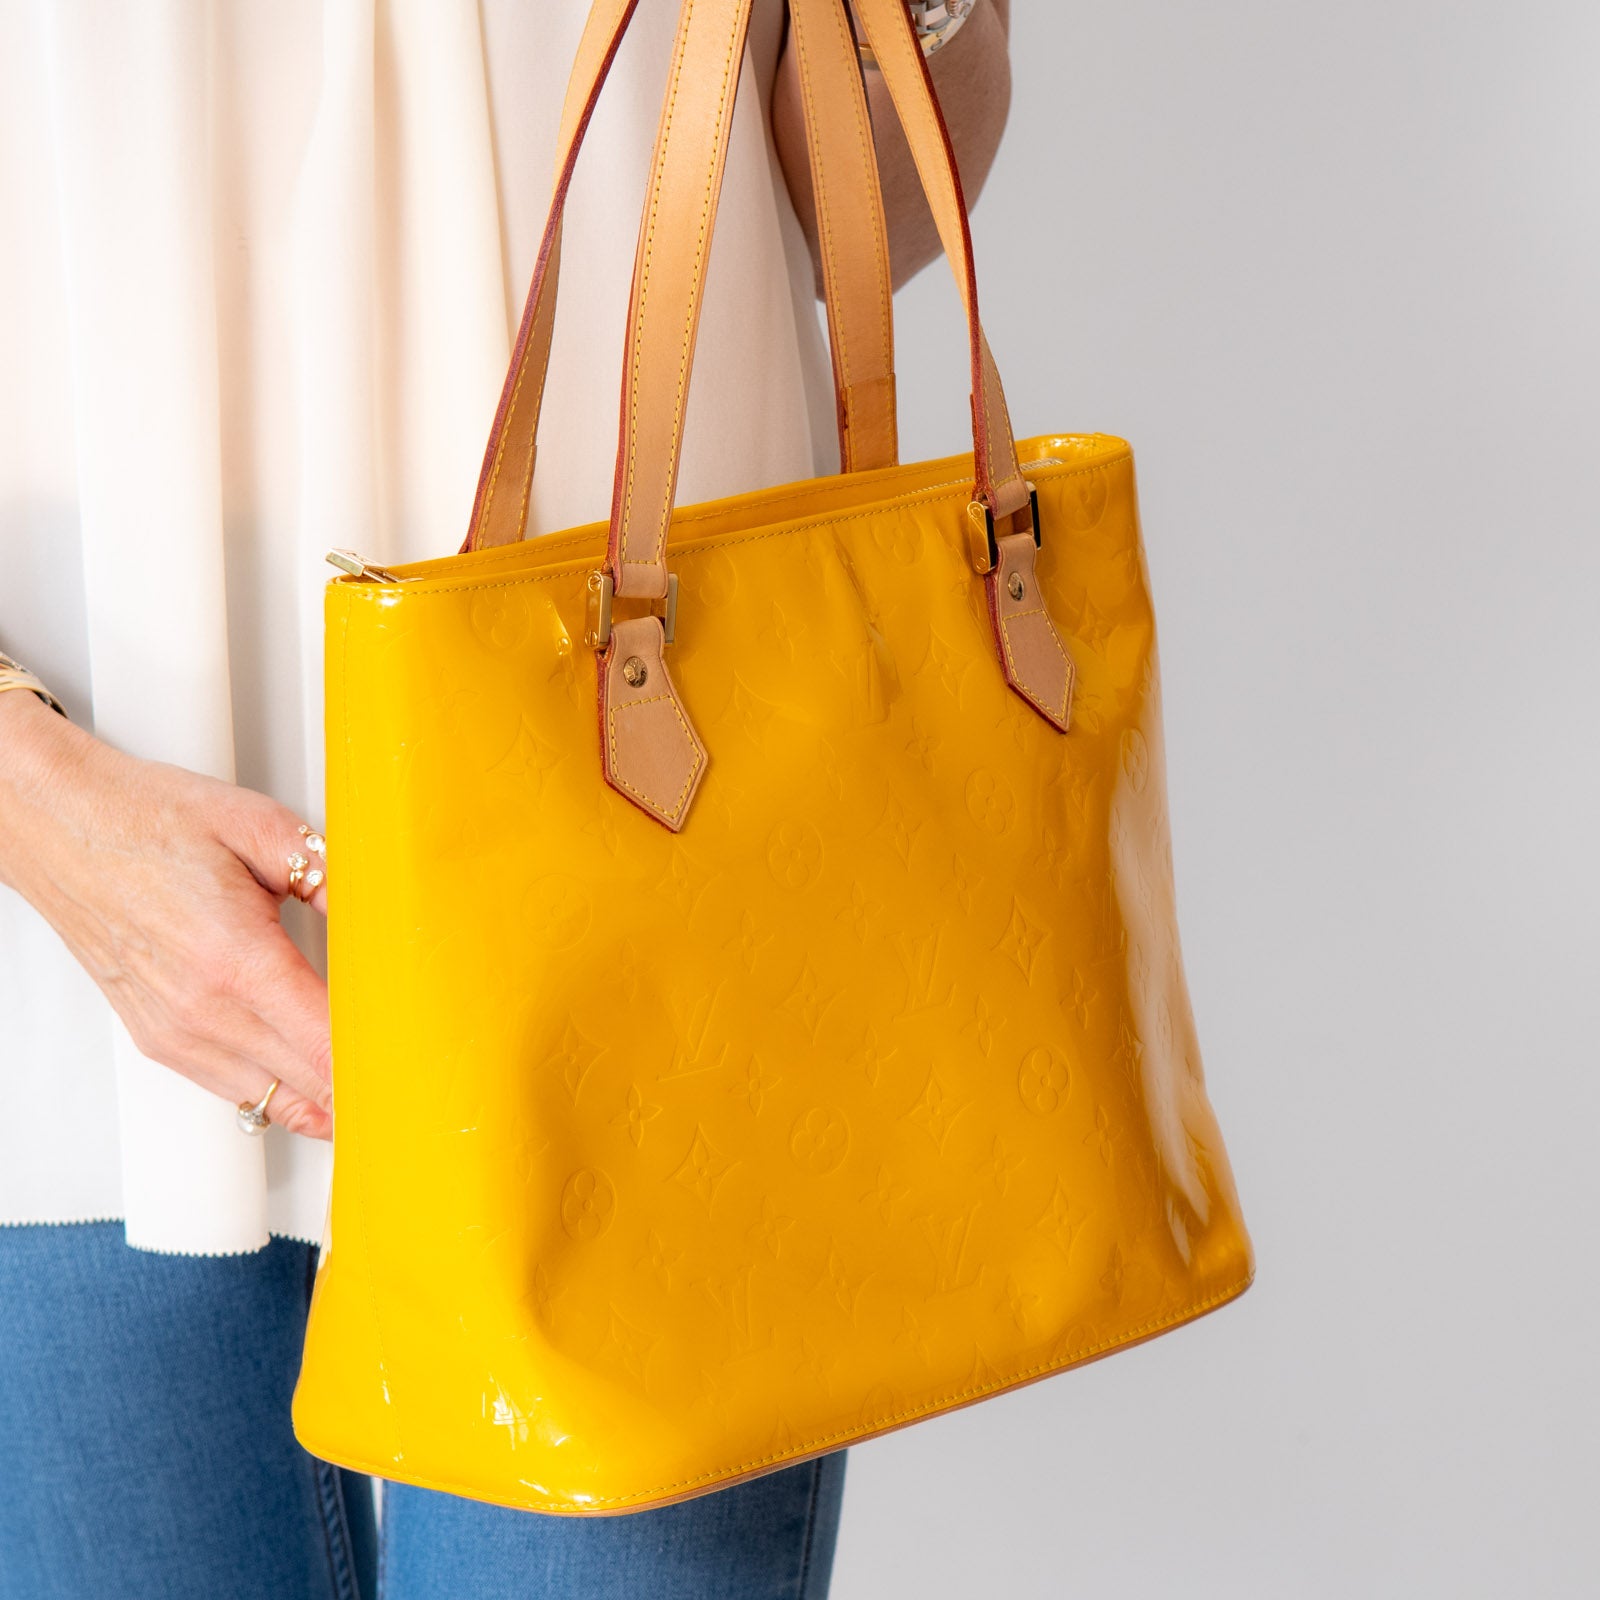 LOUIS VUITTON: Houston Yellow, Patent Leather LV Logo Tote/Shoulder Bag  (of)